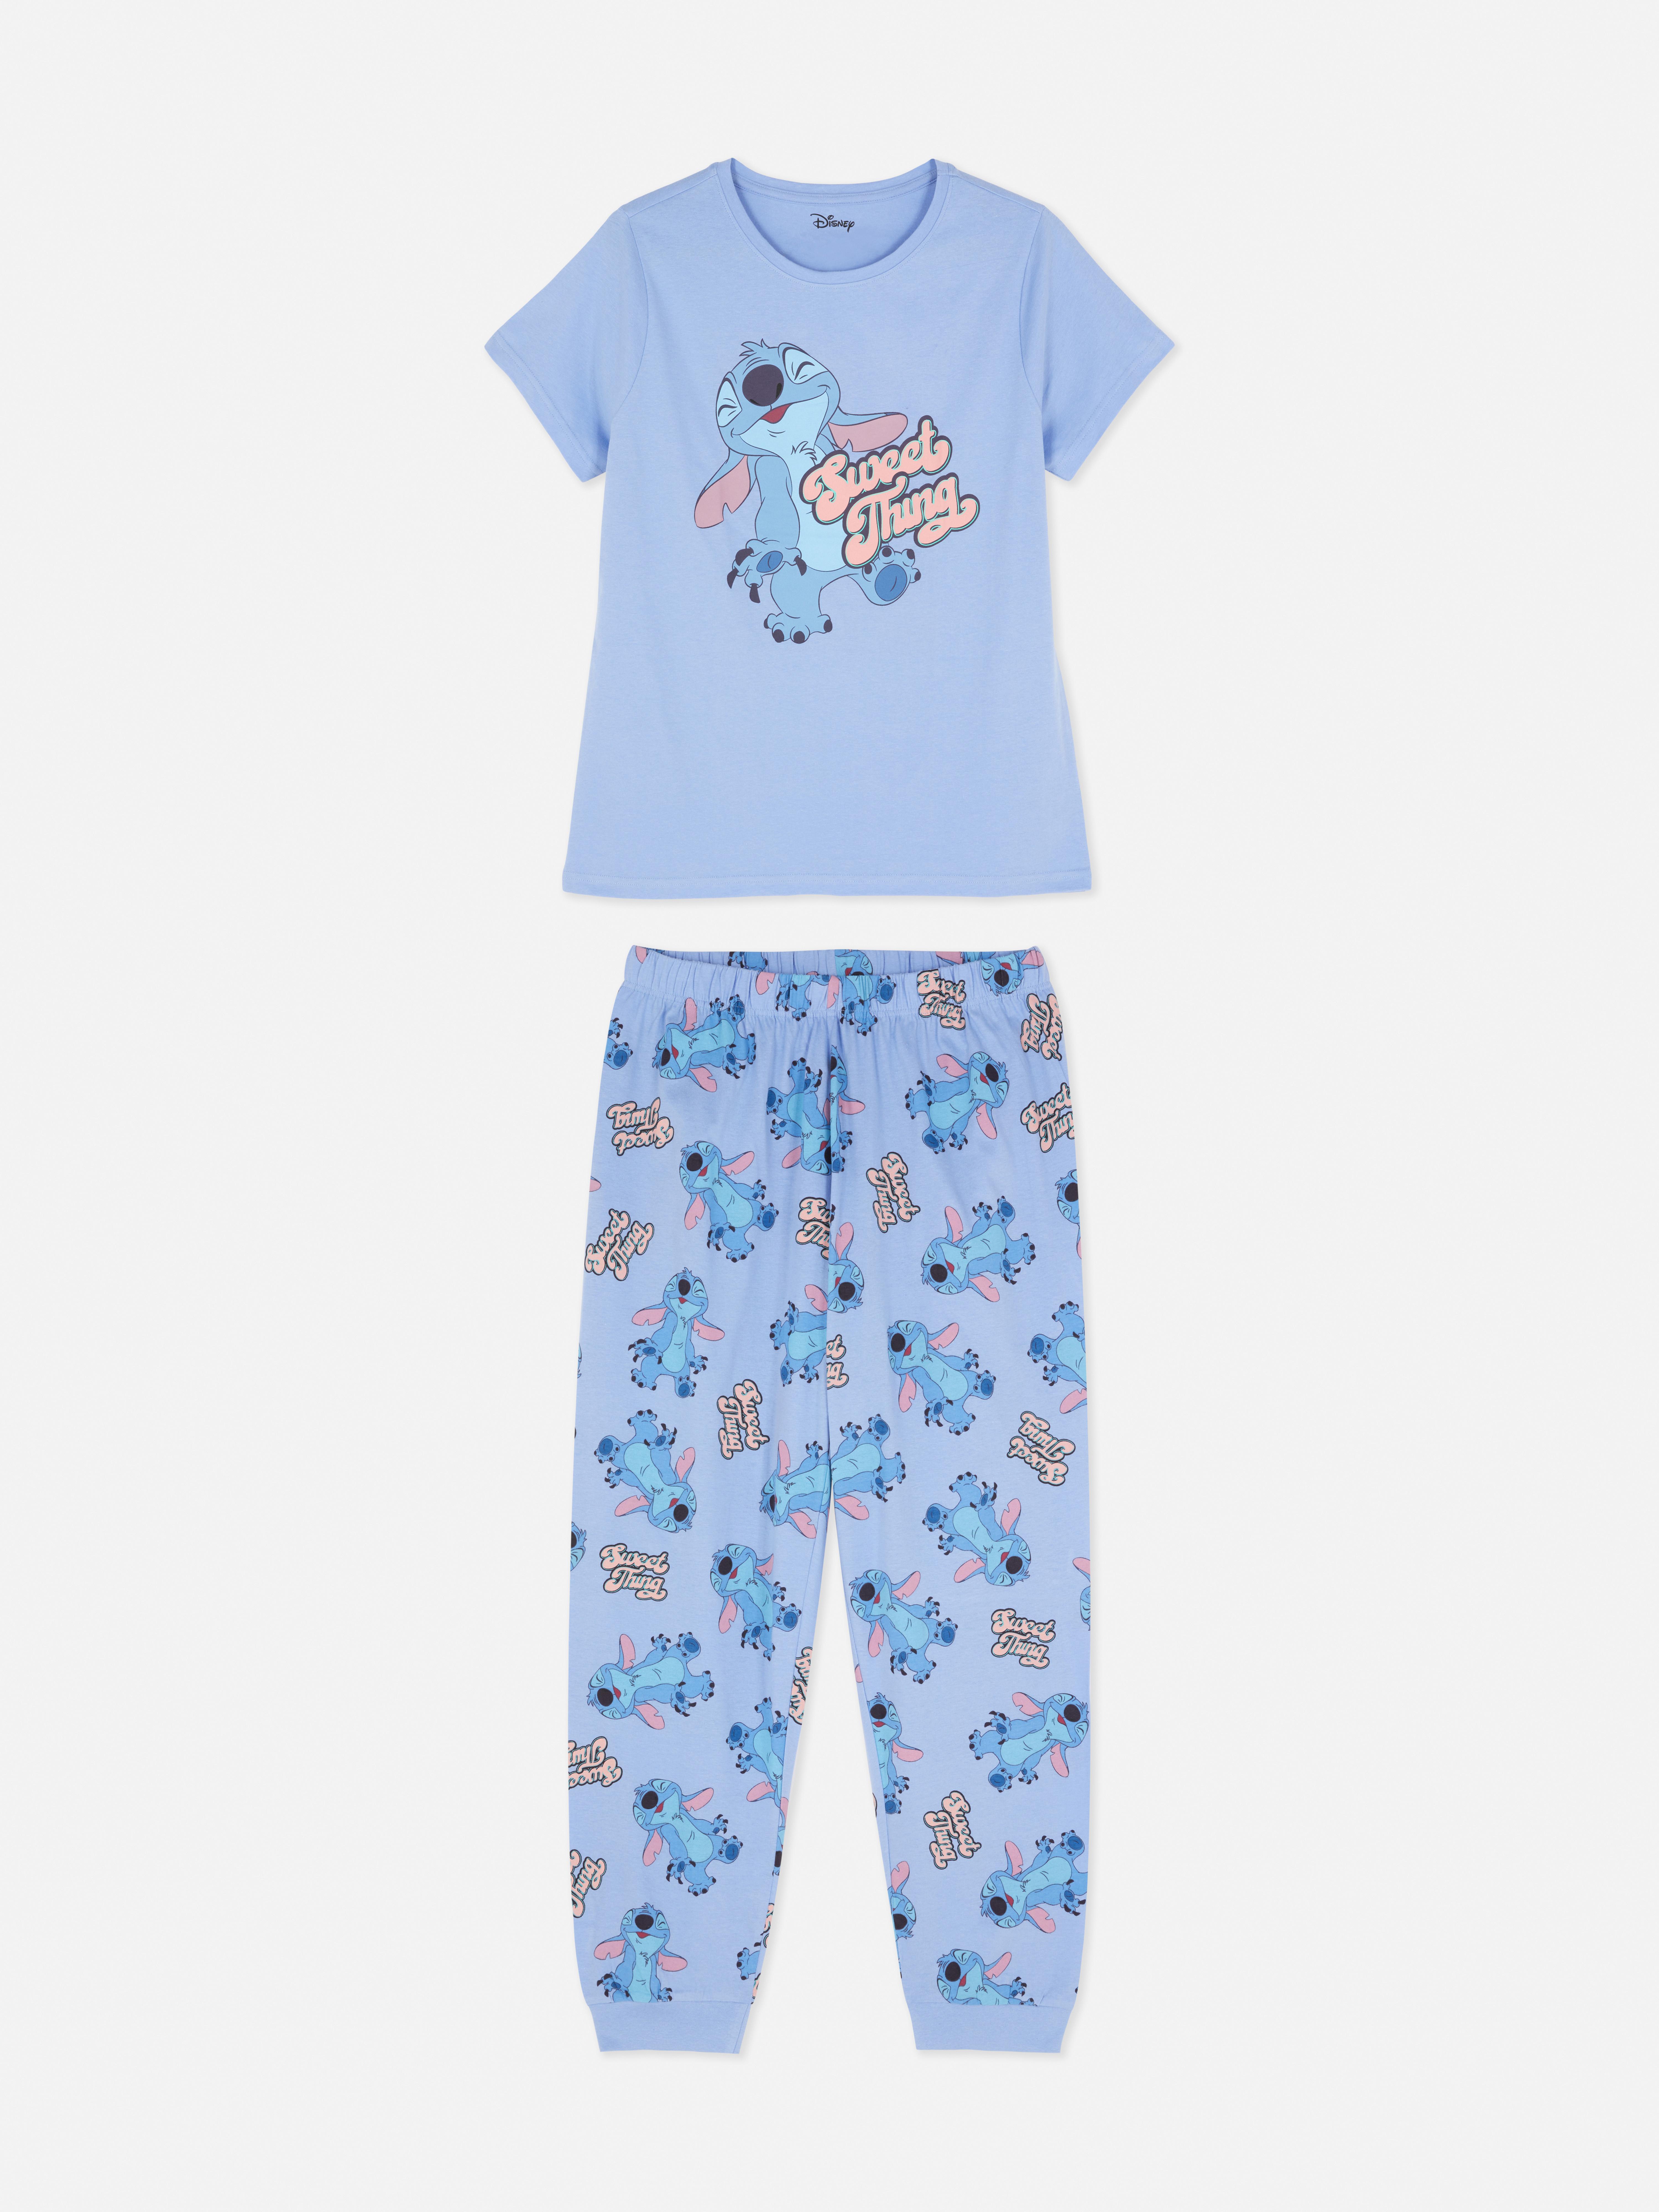 Pijama gráfico con personaje de Disney